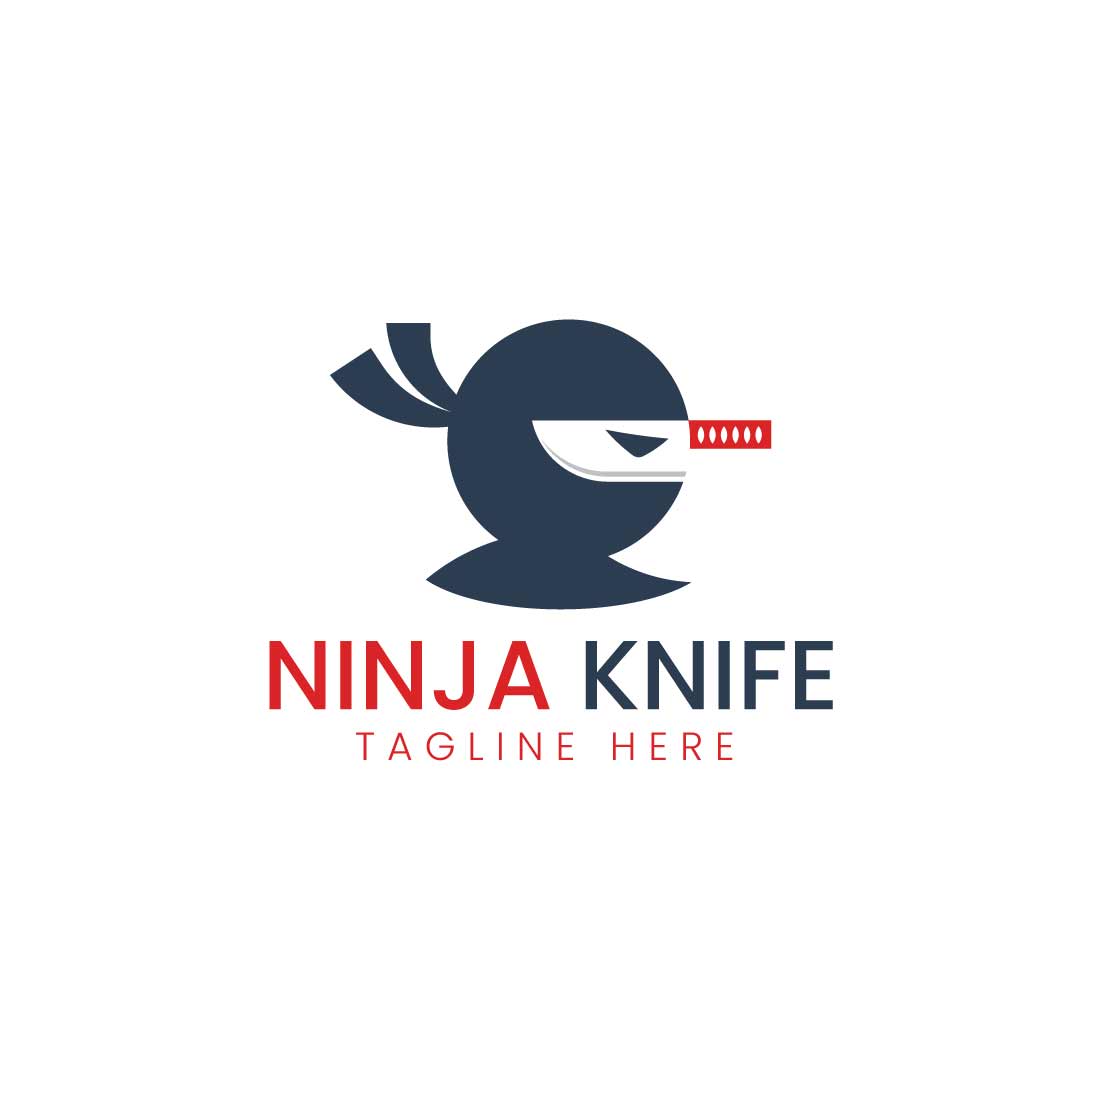 Professional ninja knife logo design preview image.